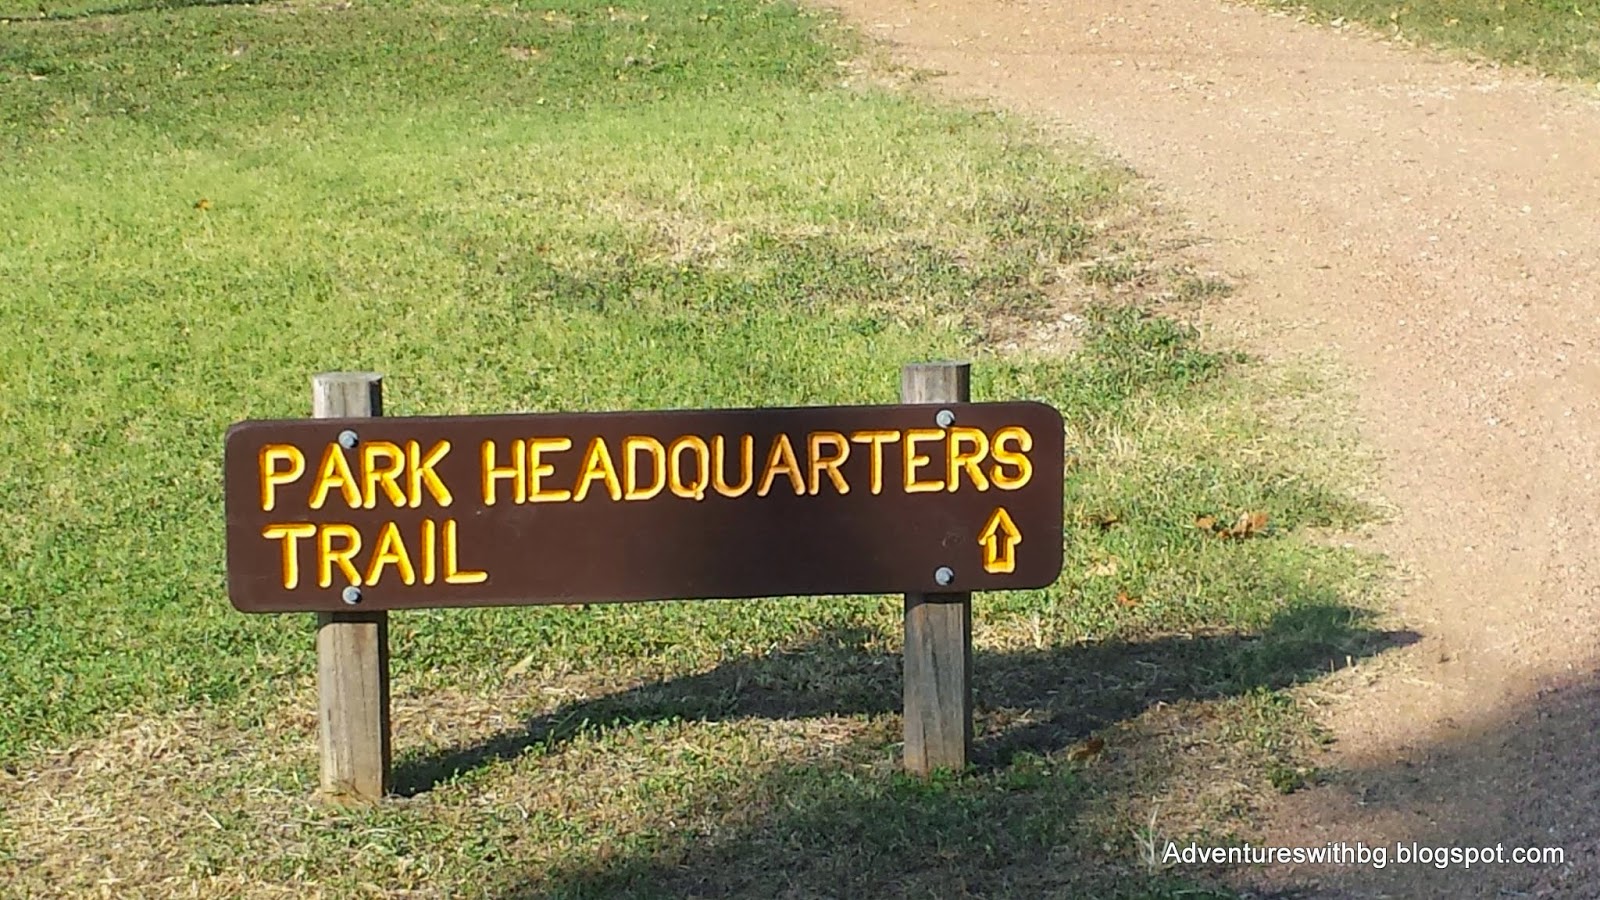 The Park Headquarters Trailhead at Palmetto State Park